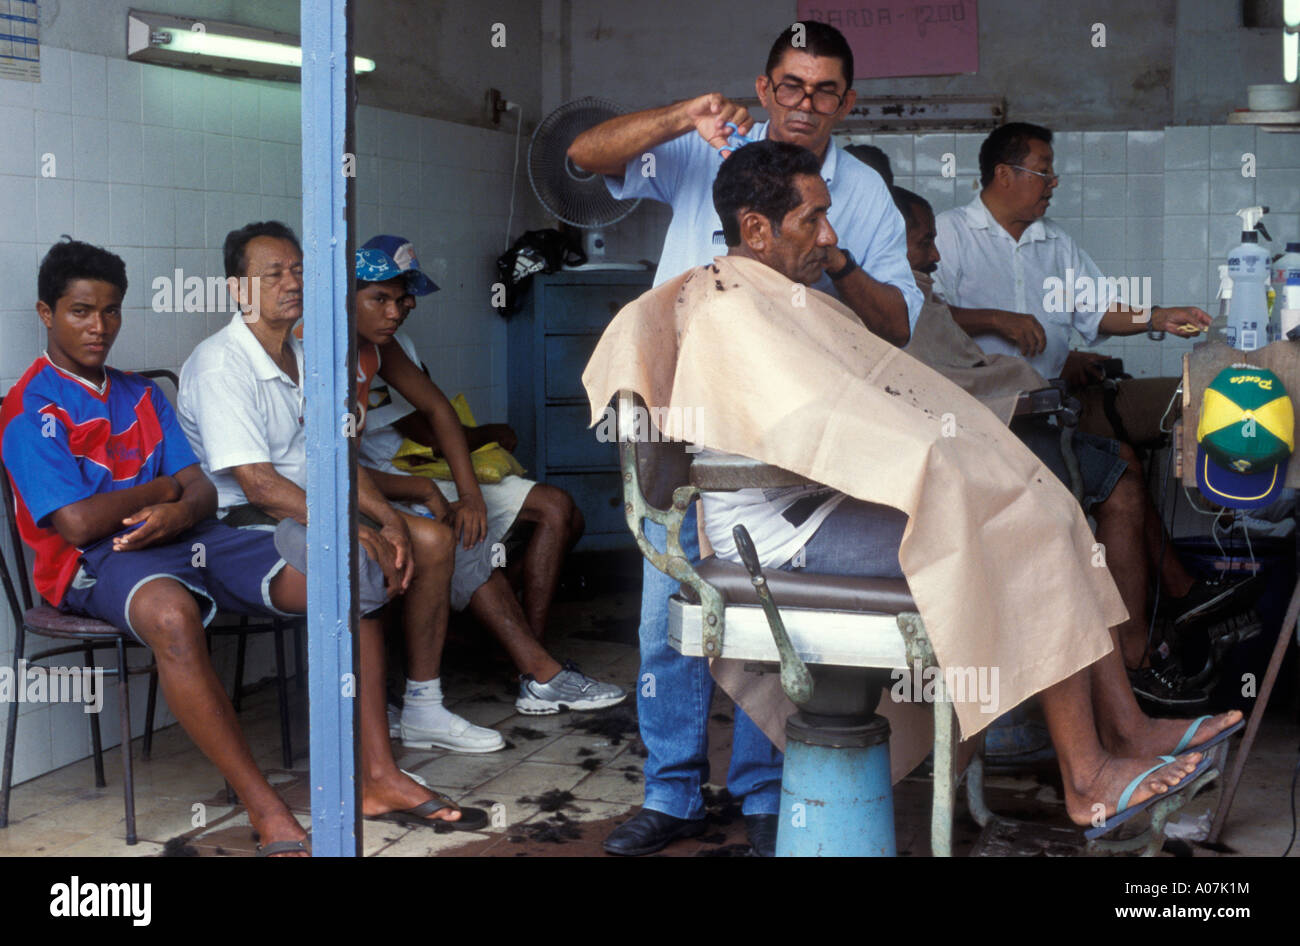 Model # 7 Brazilian Barber Shop - Brazilian Barber Shop